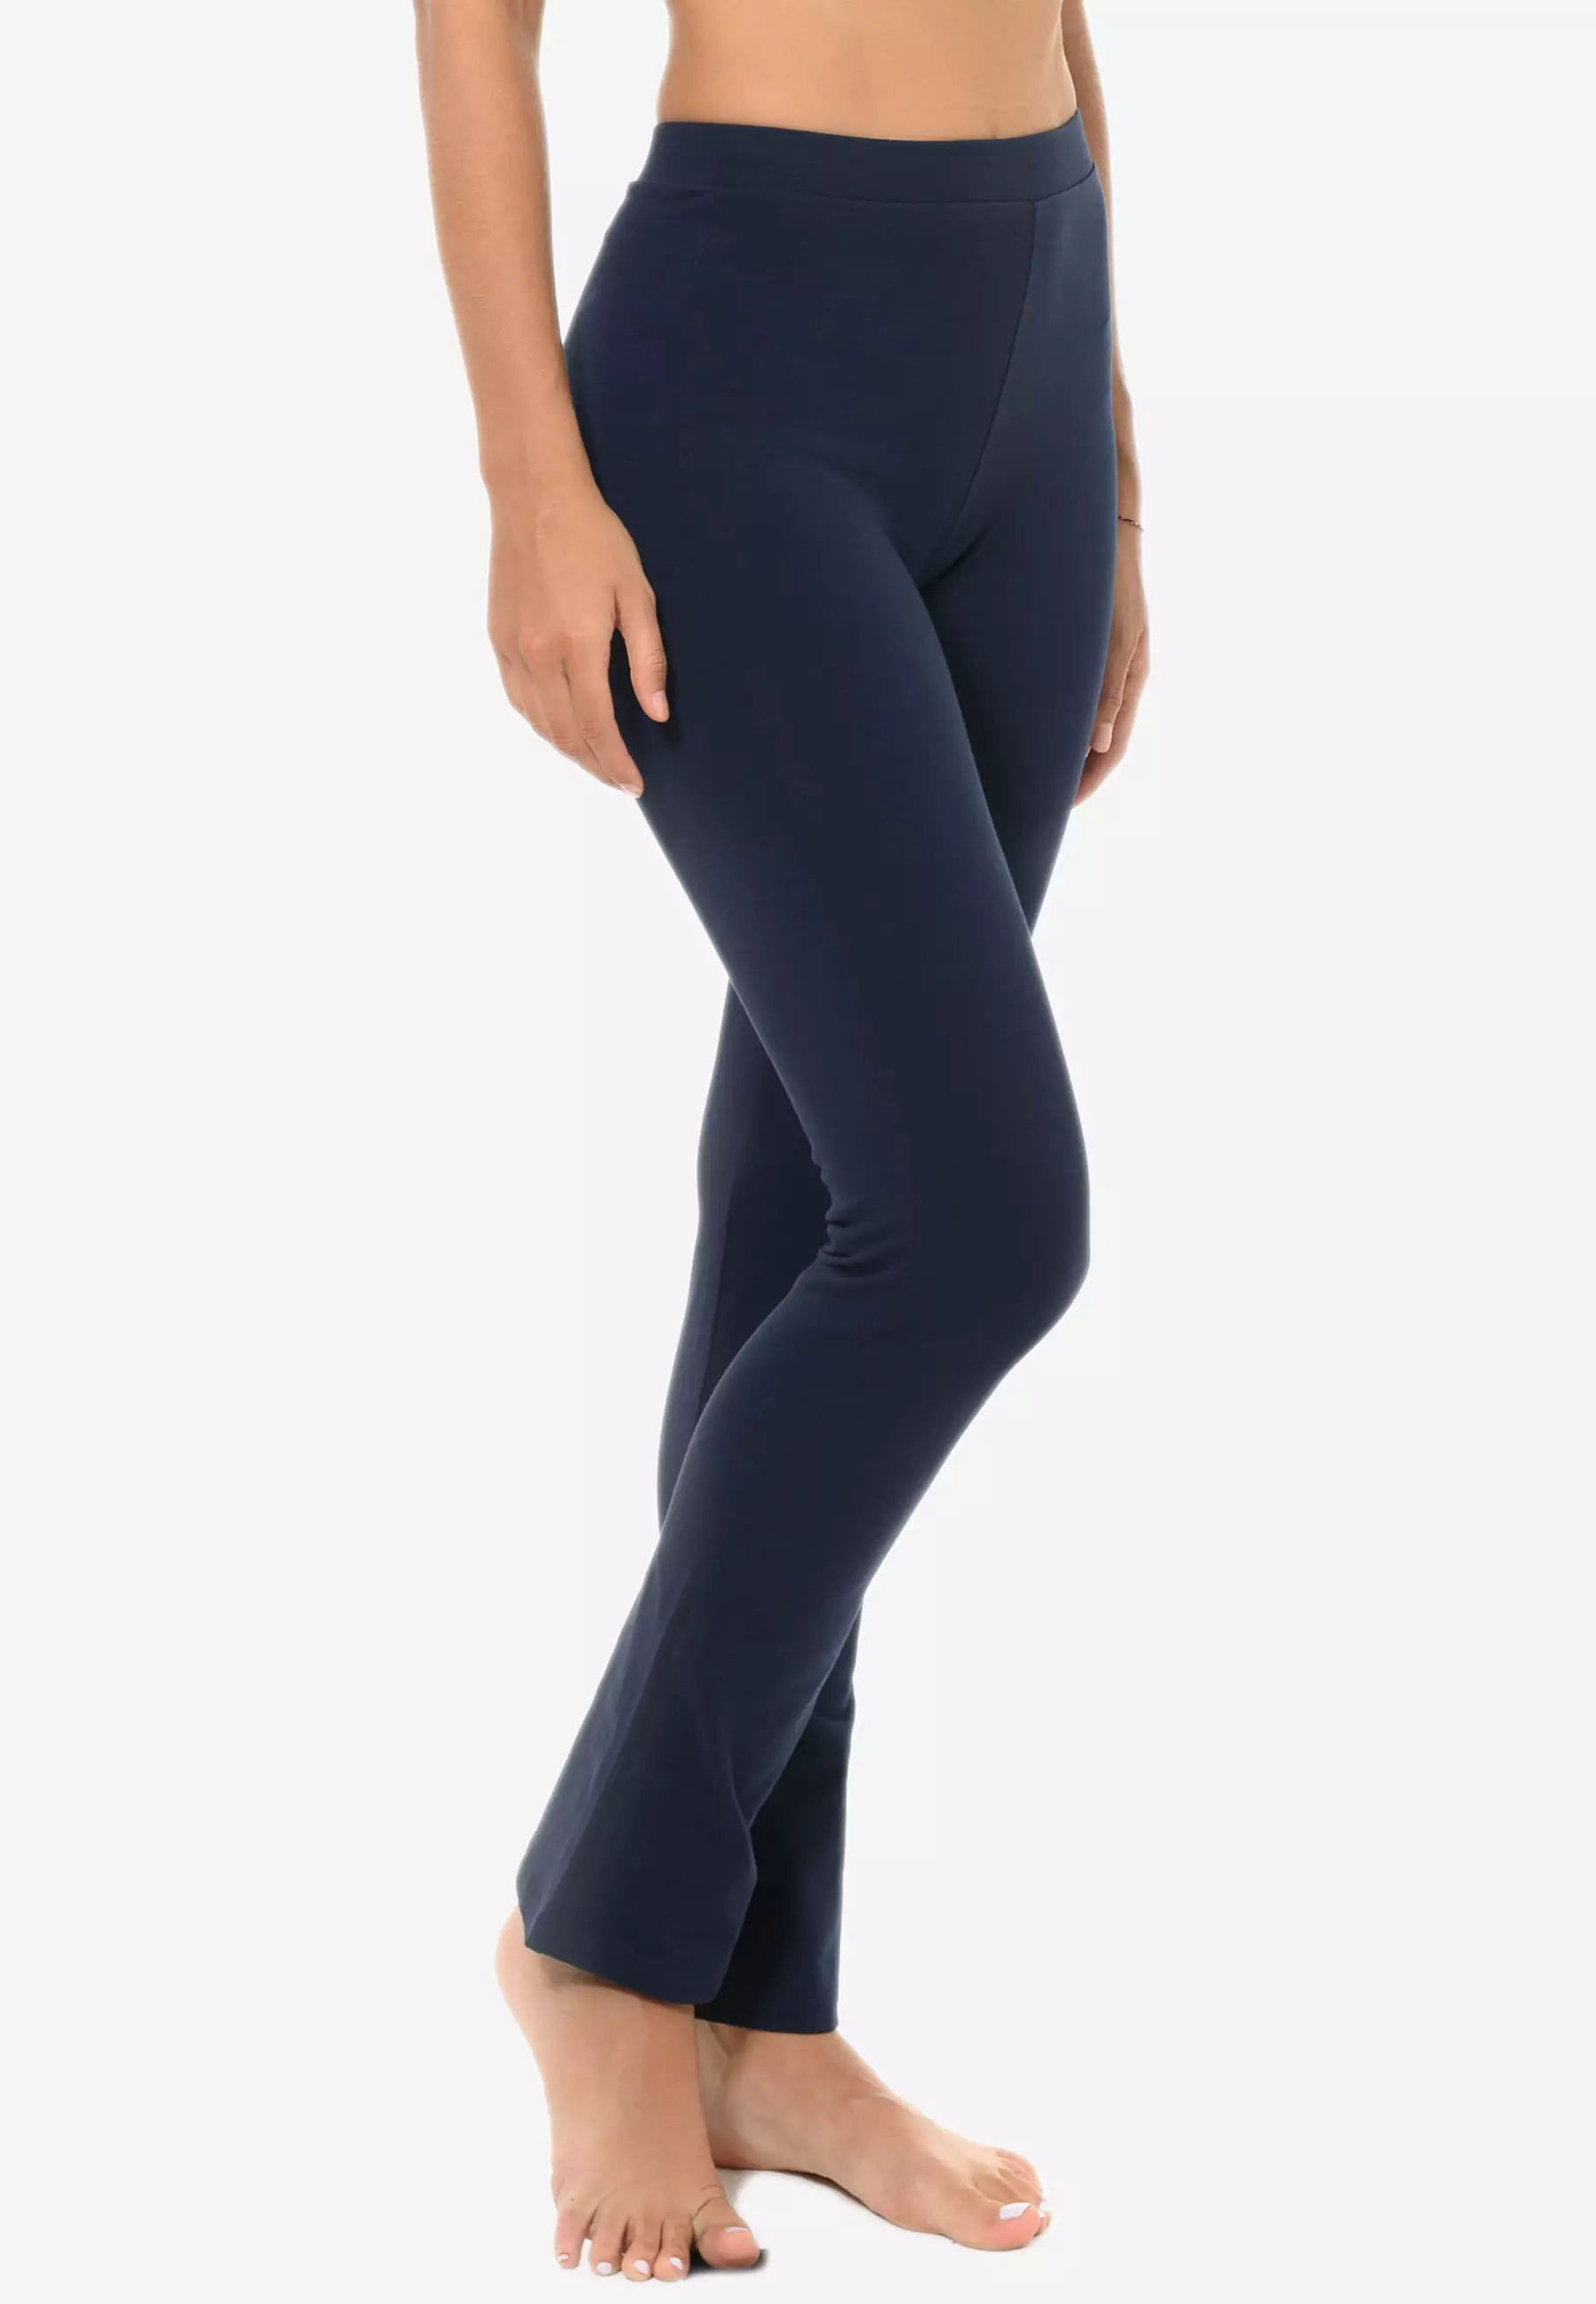 Leggings Cotton Stretchy Yoga Pants Navy Blue Women's Size XL